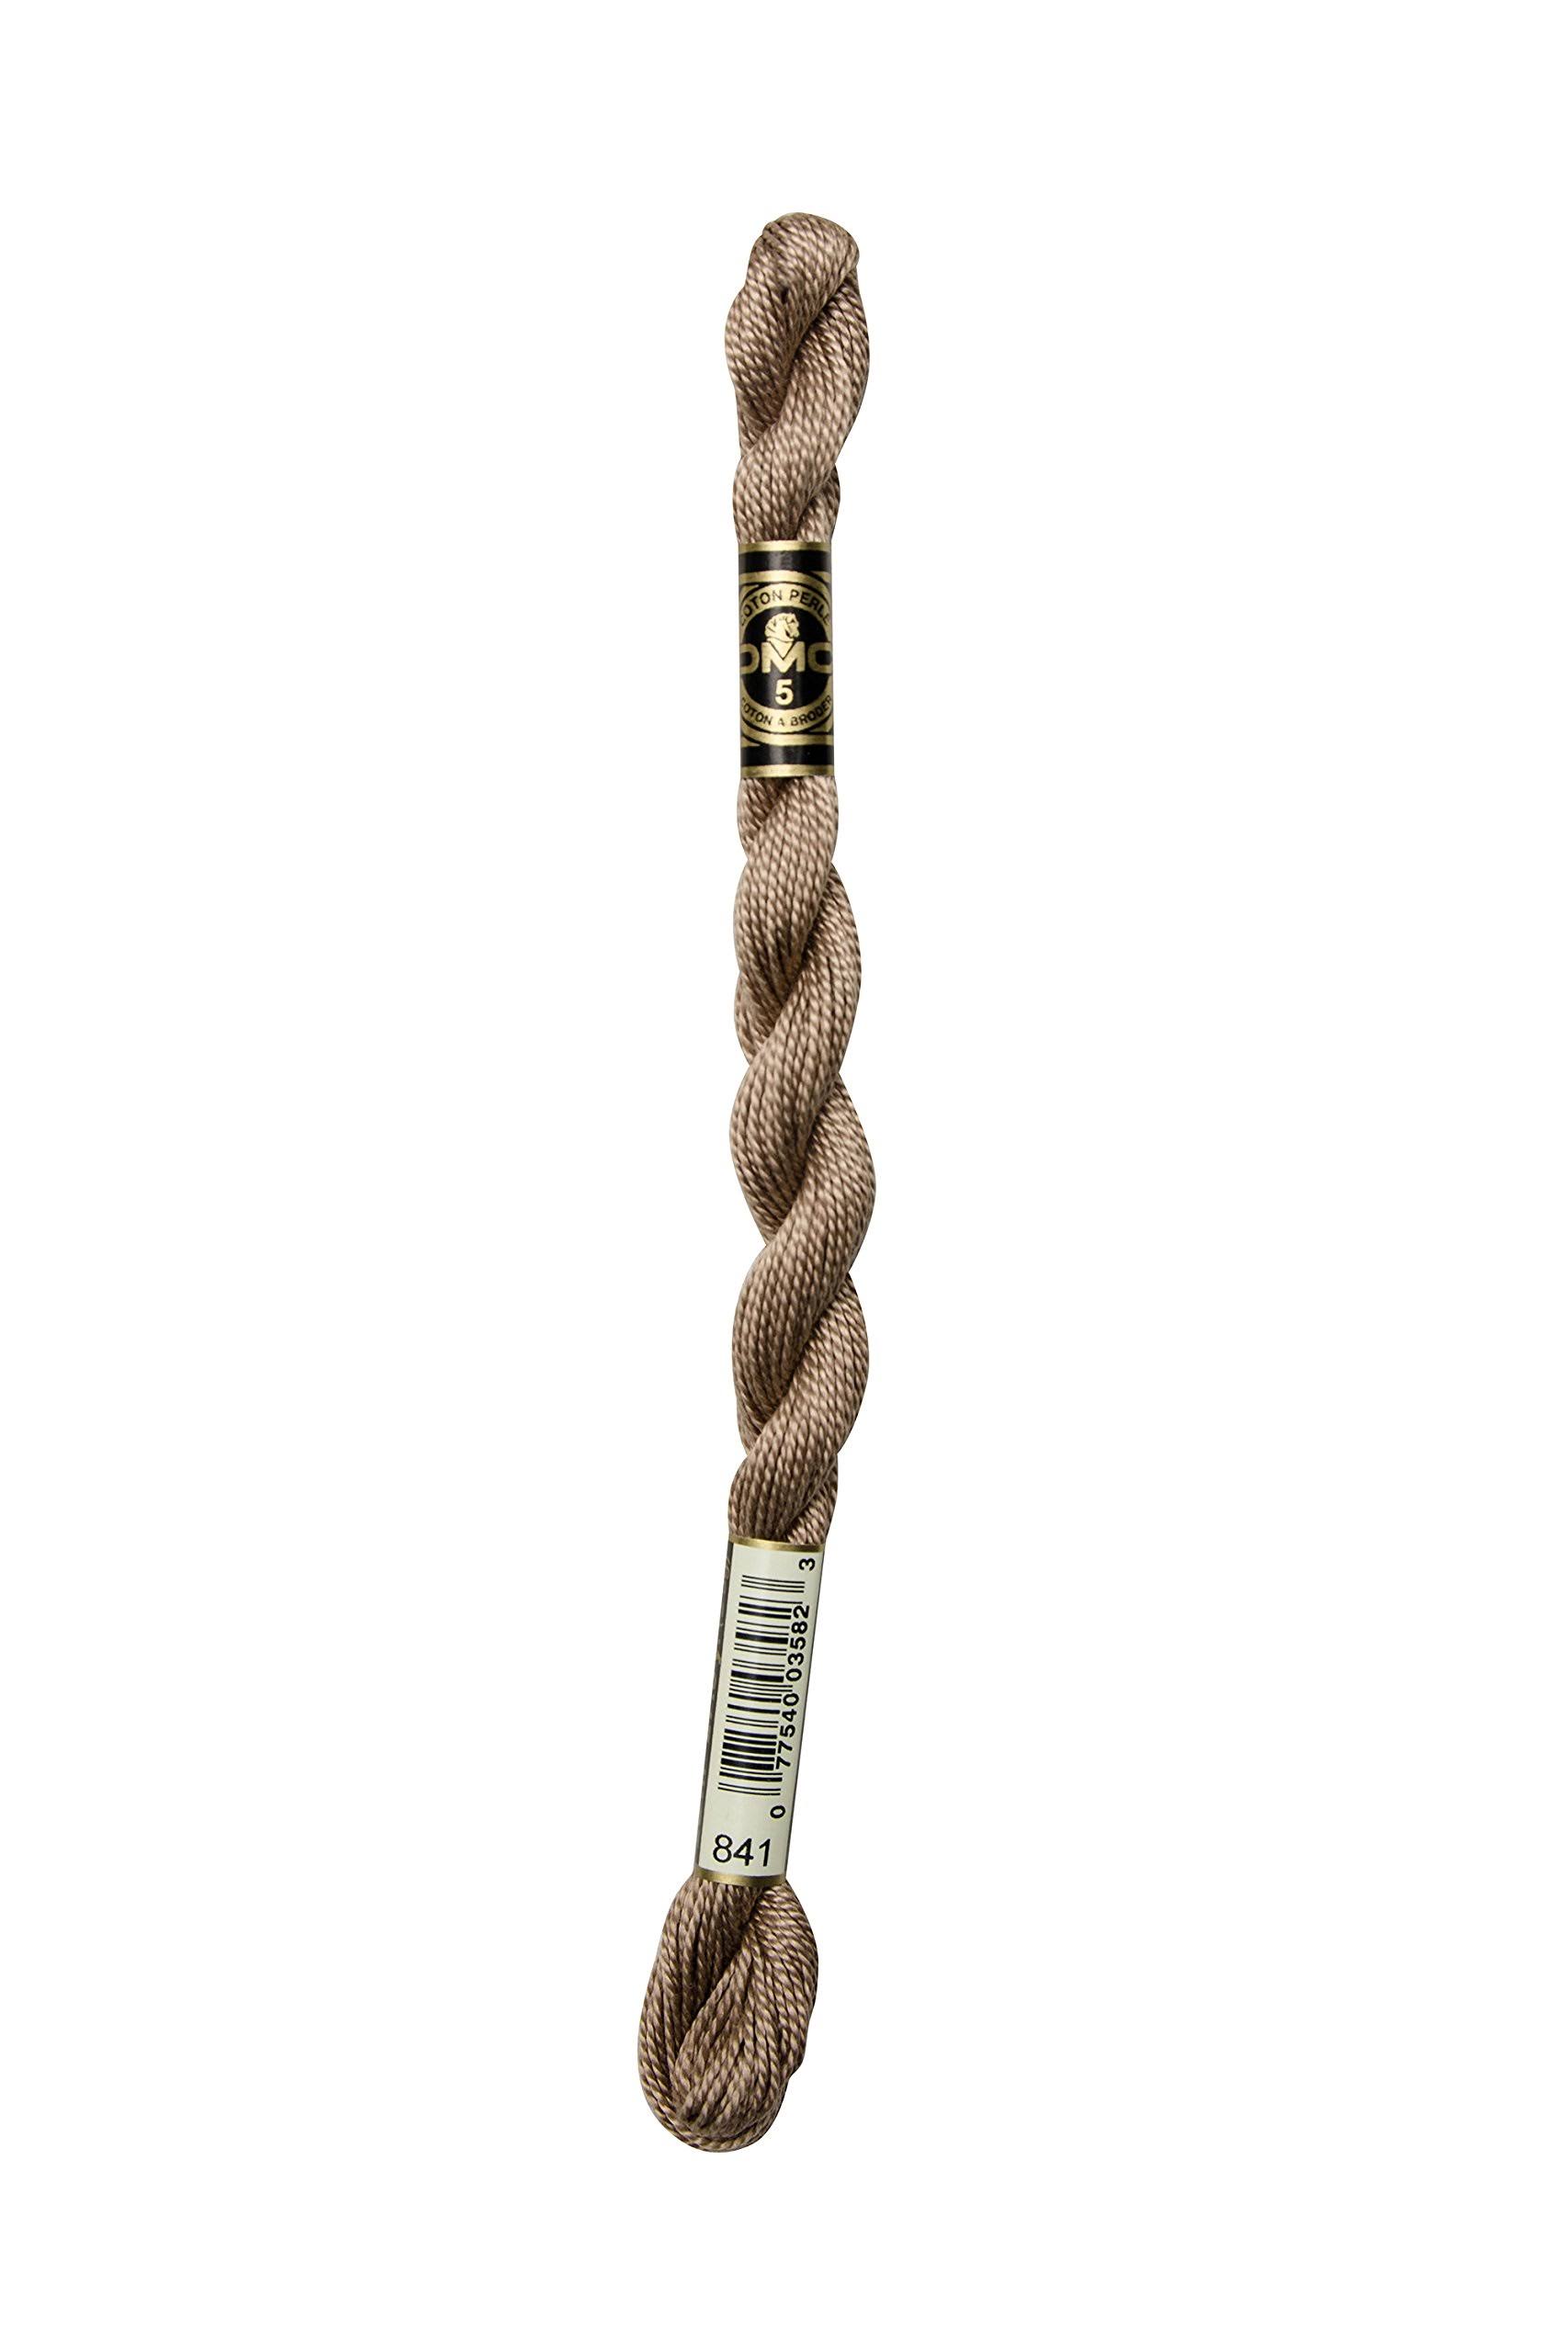 DMC Pearl Cotton Thread - Light Beige Brown, Size 5